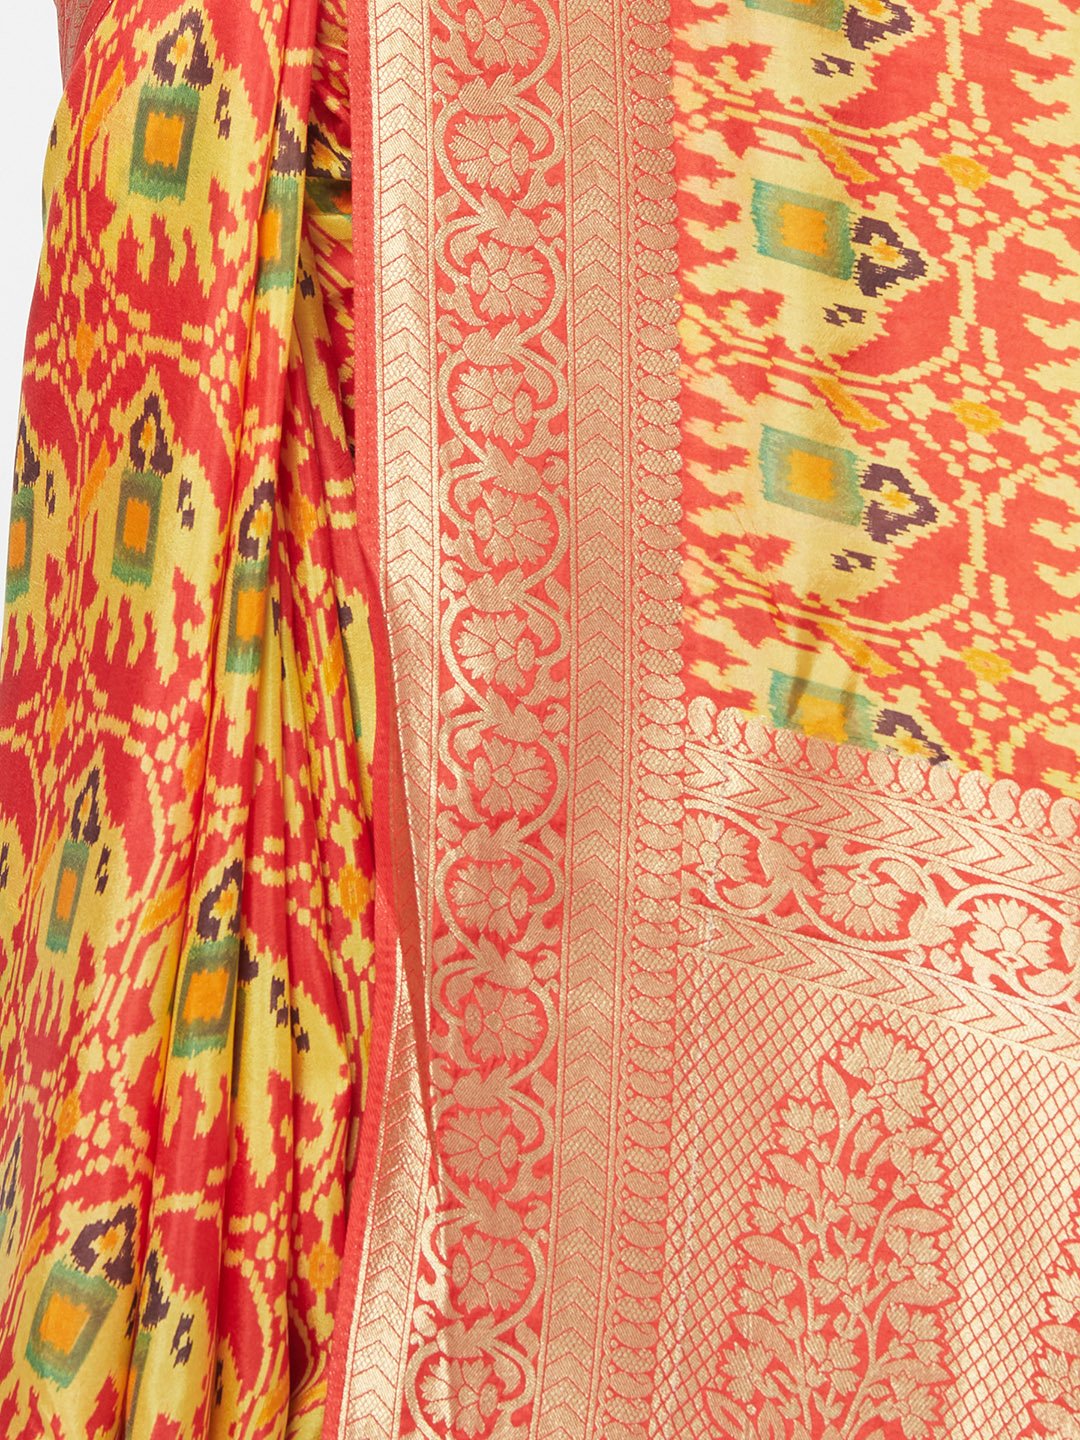 Handloom Saree In Multicolor For Festival